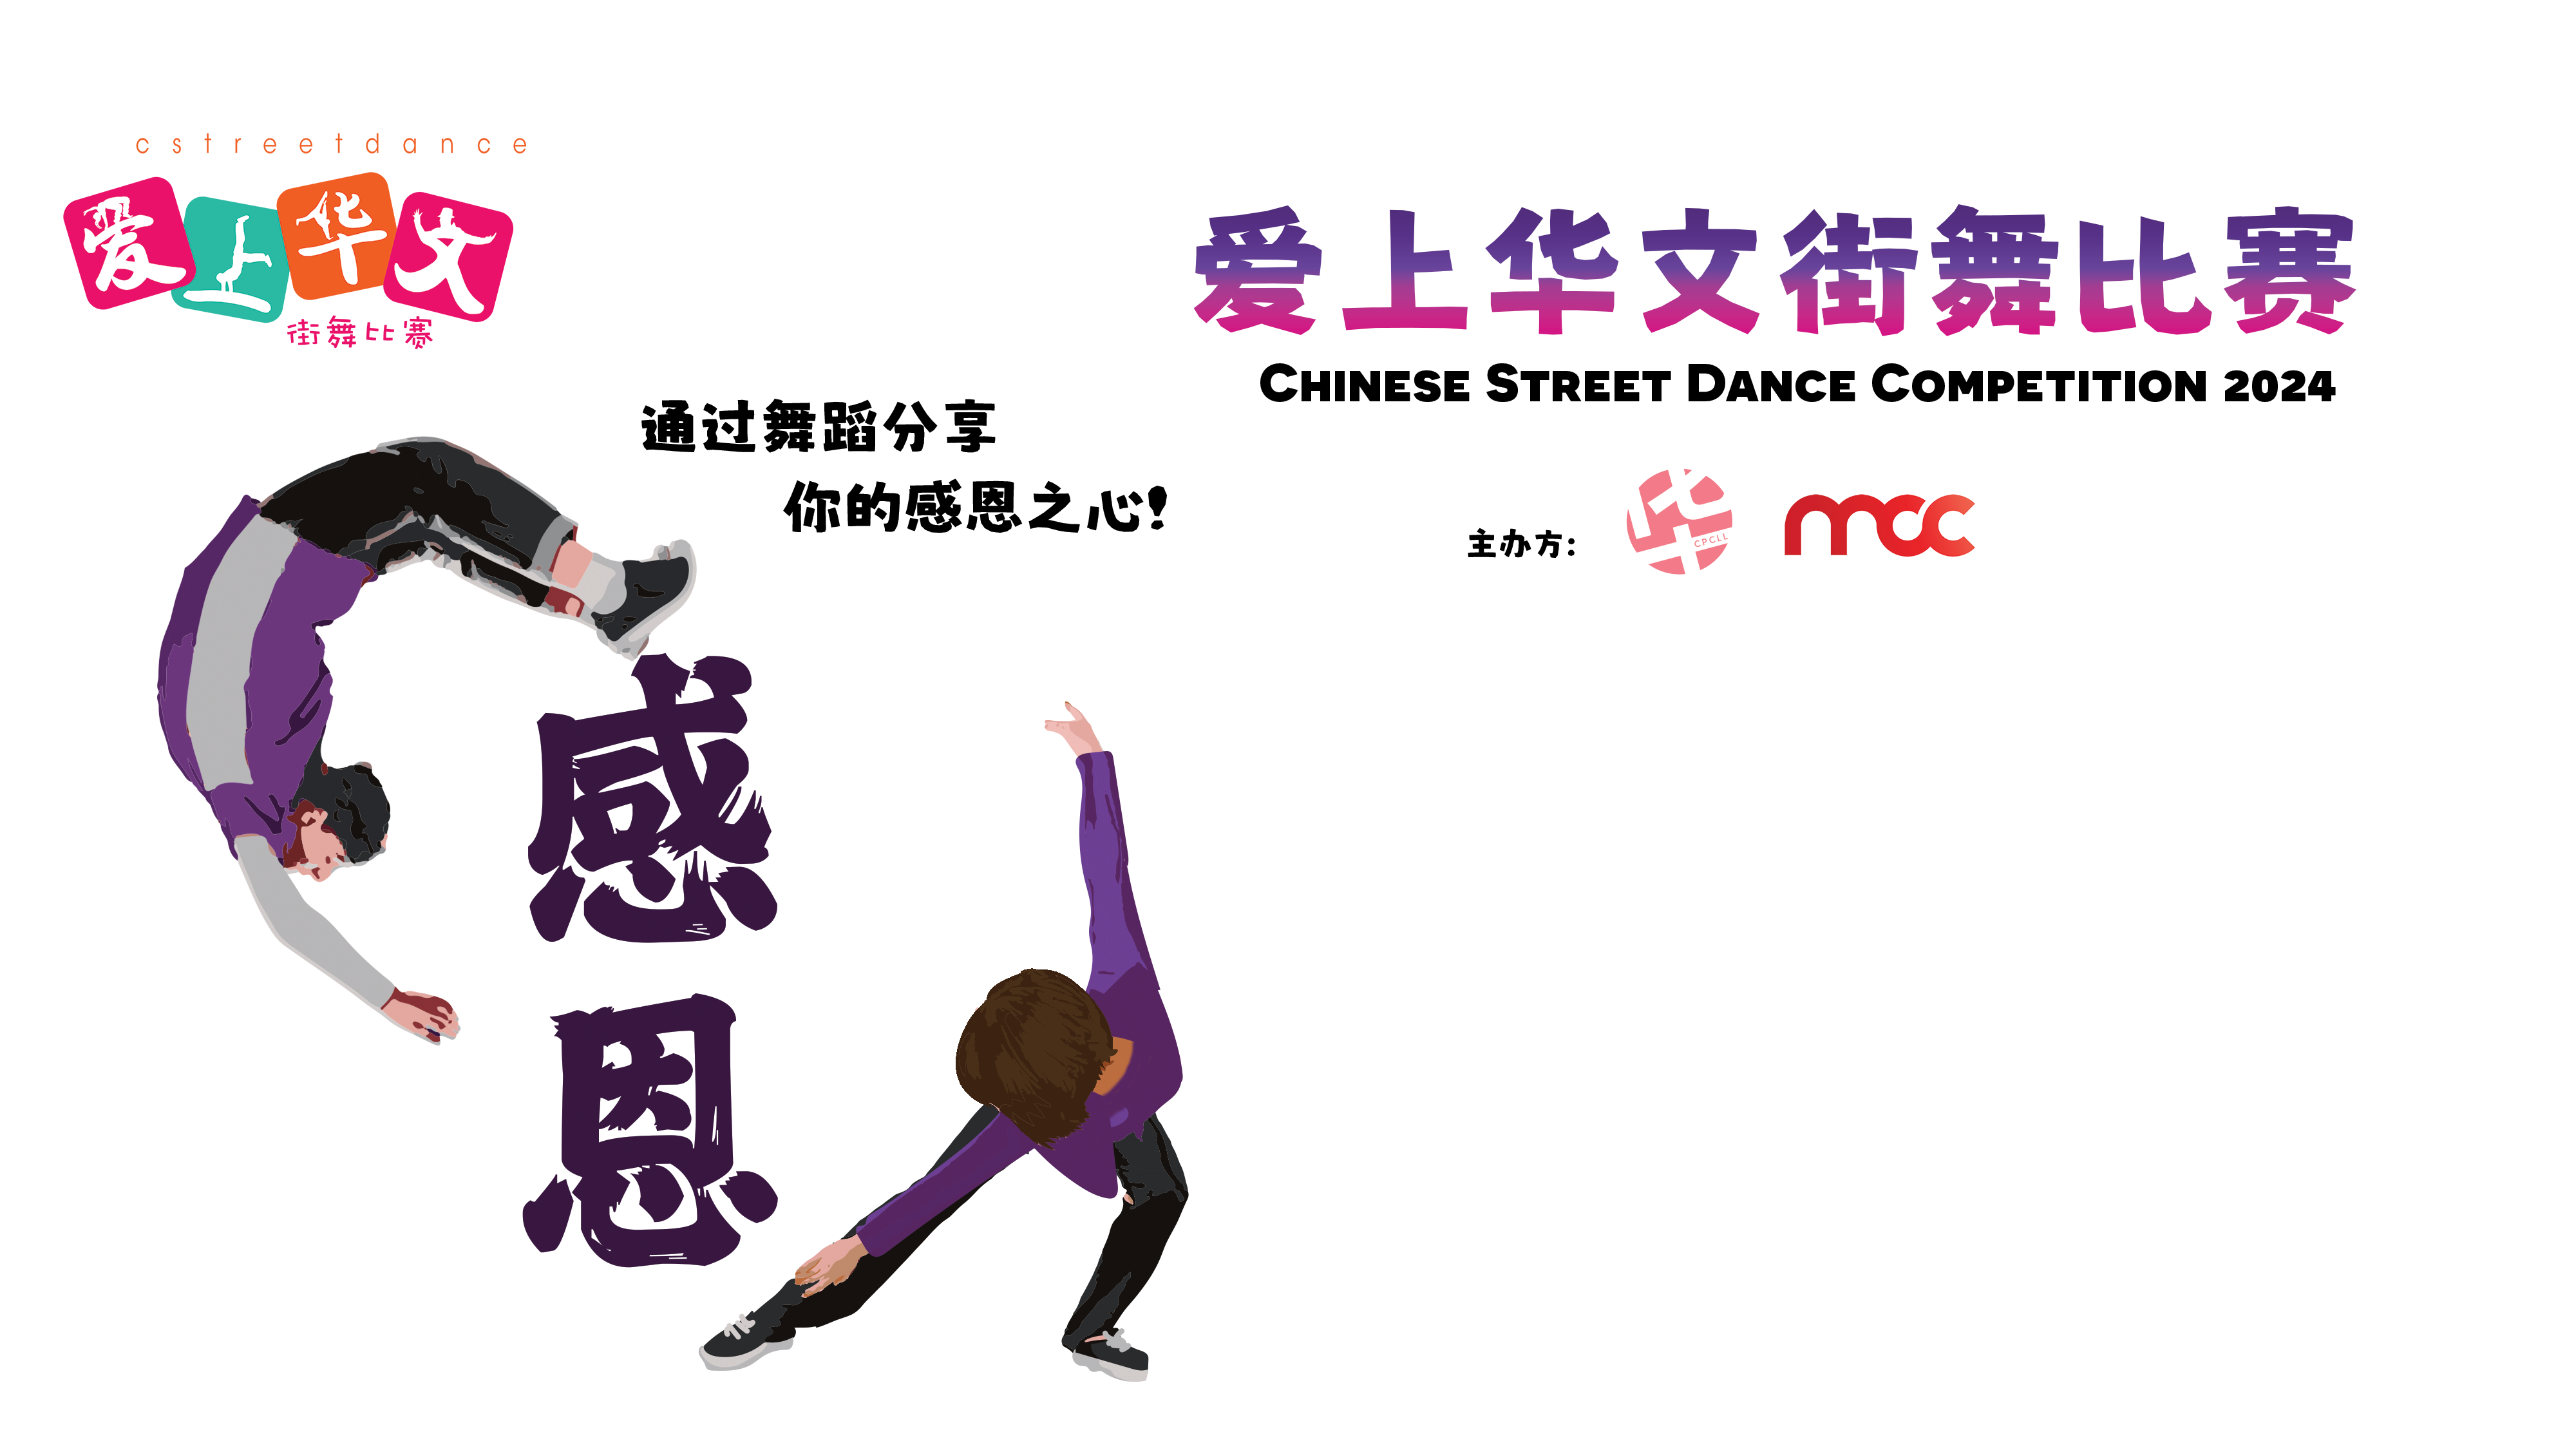 爱上华文街舞比赛。Chinese Street Dance Competition 2024